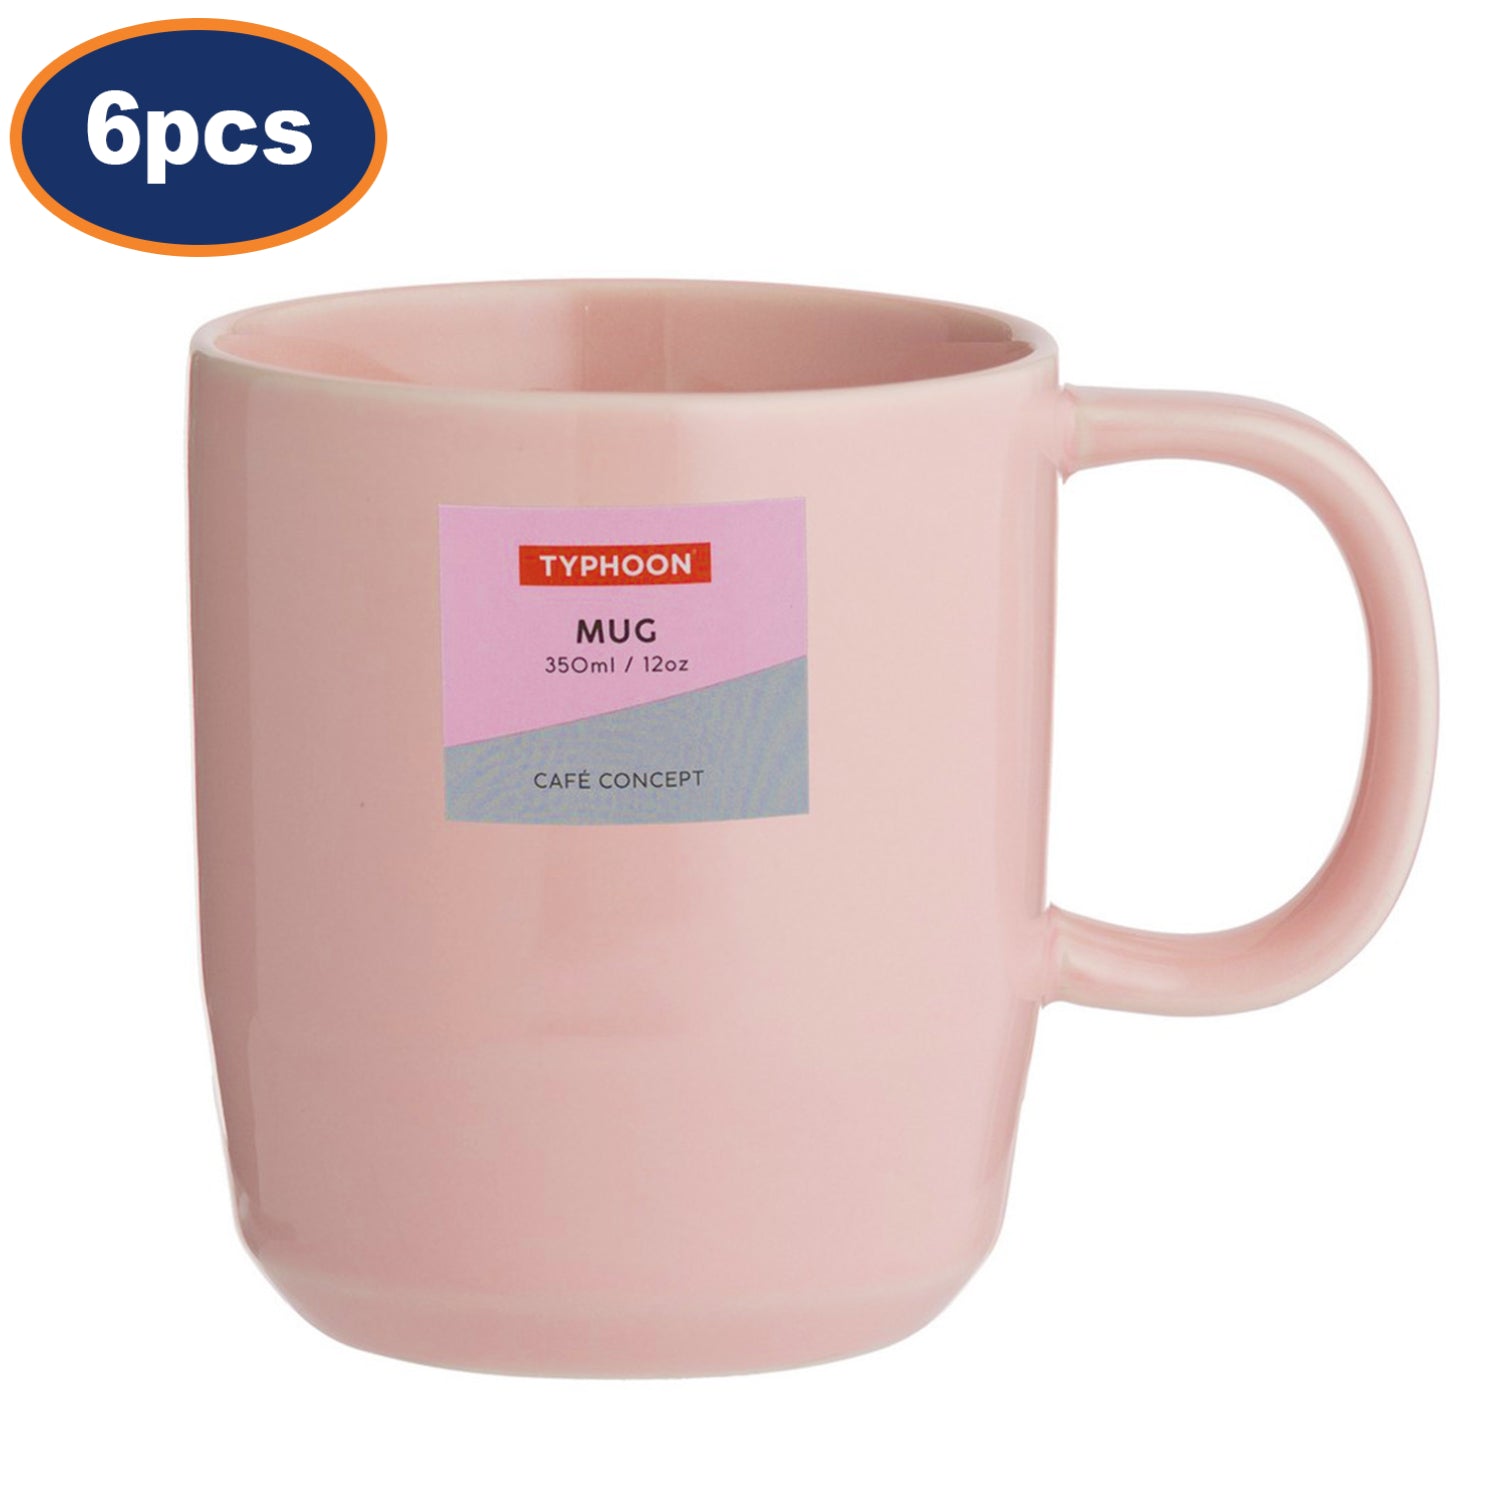 6Pcs Typhoon Cafe Concept 350ml Pink Mug